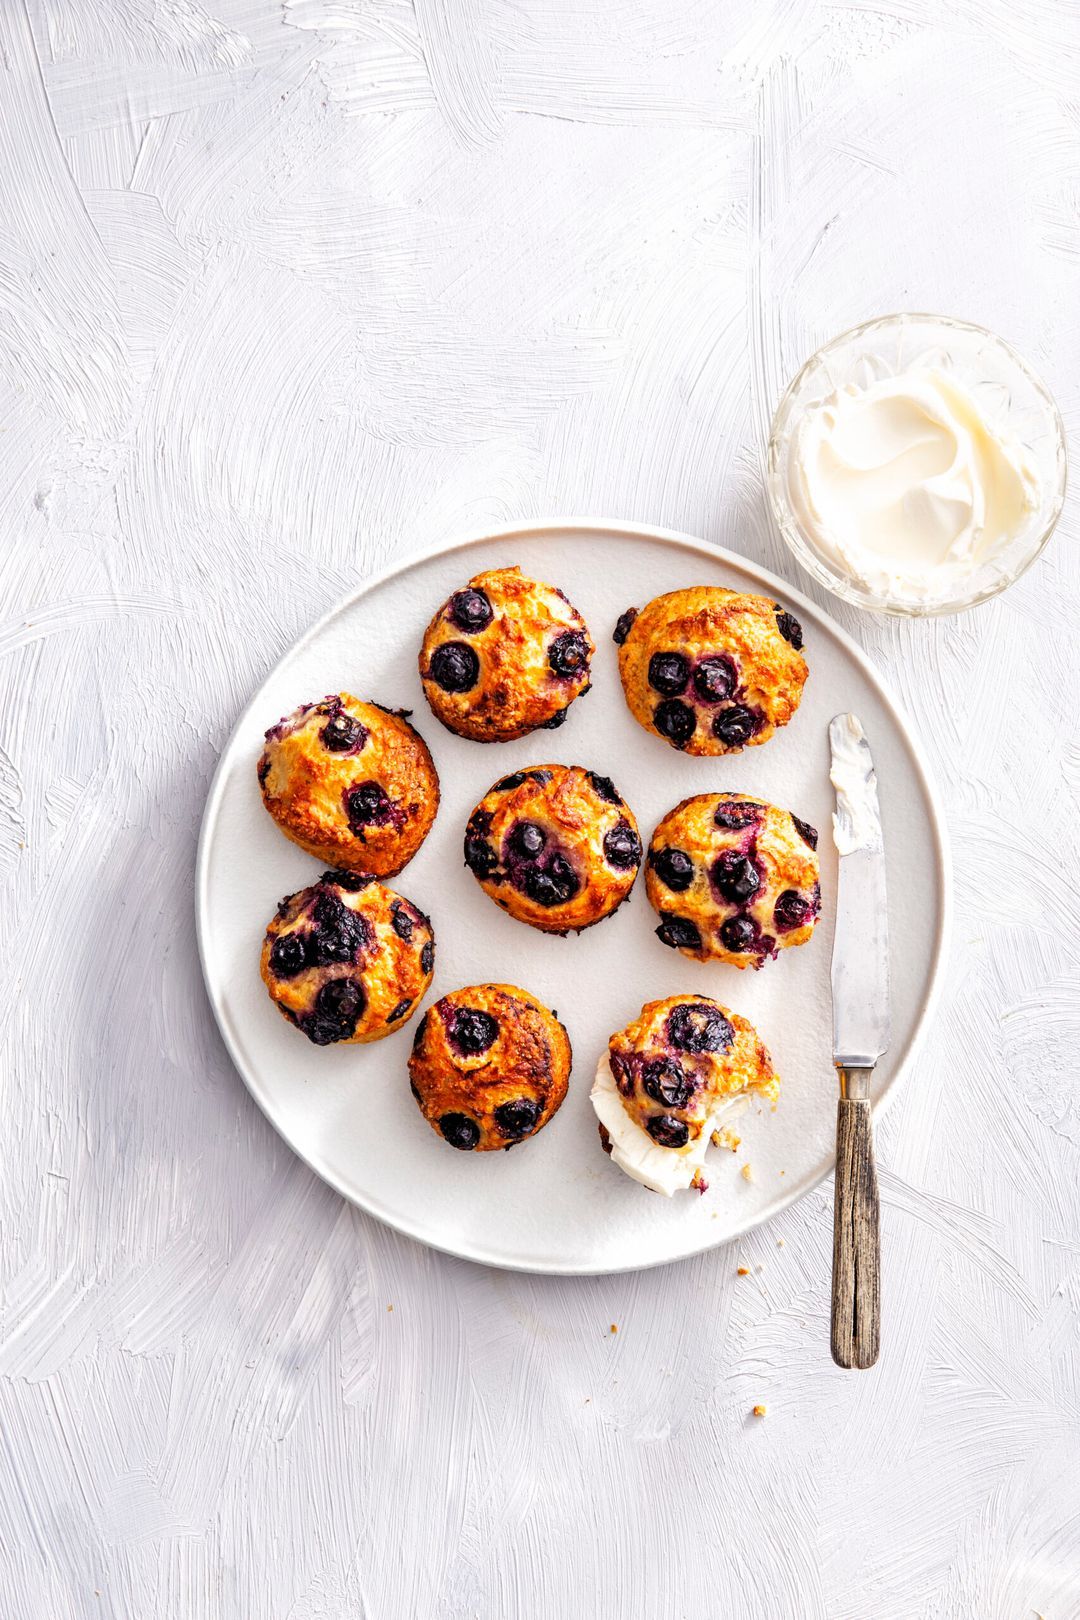 Buttermilk scones with blueberries